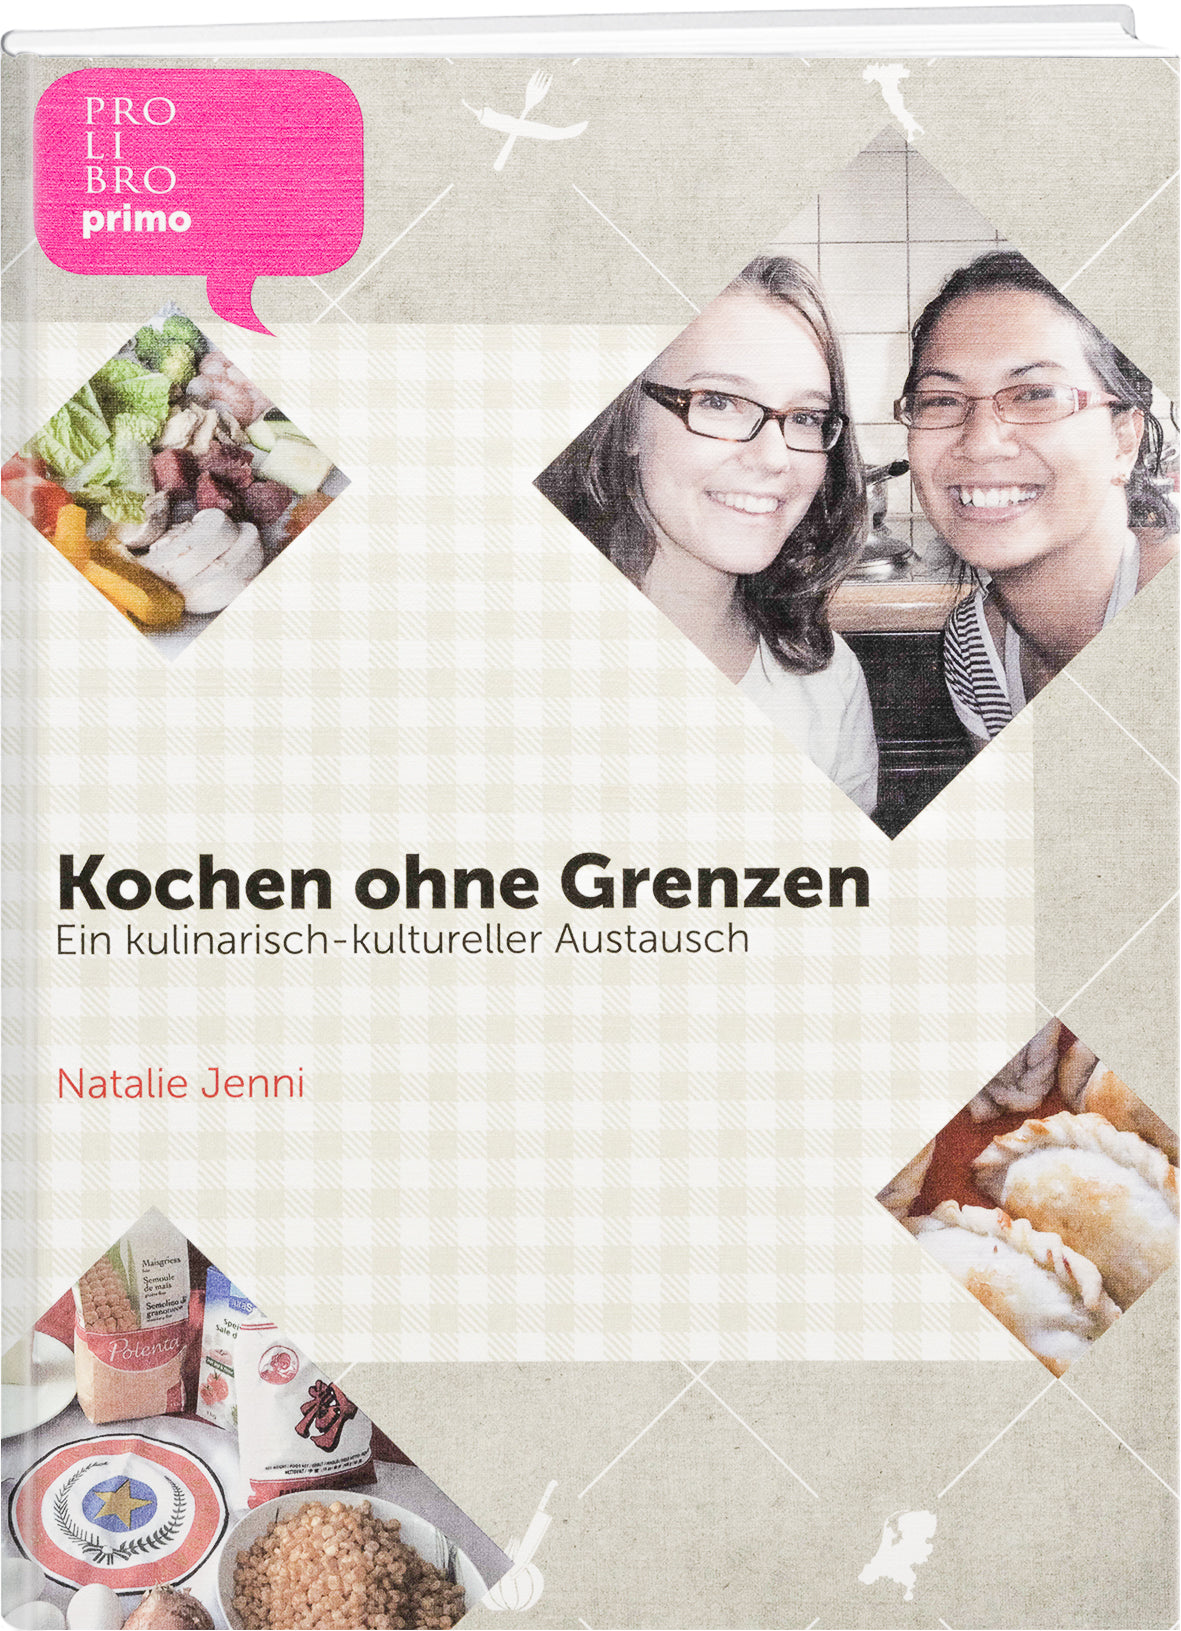 Natalie Jenni: Kochen ohne Grenzen - prolibro.ch